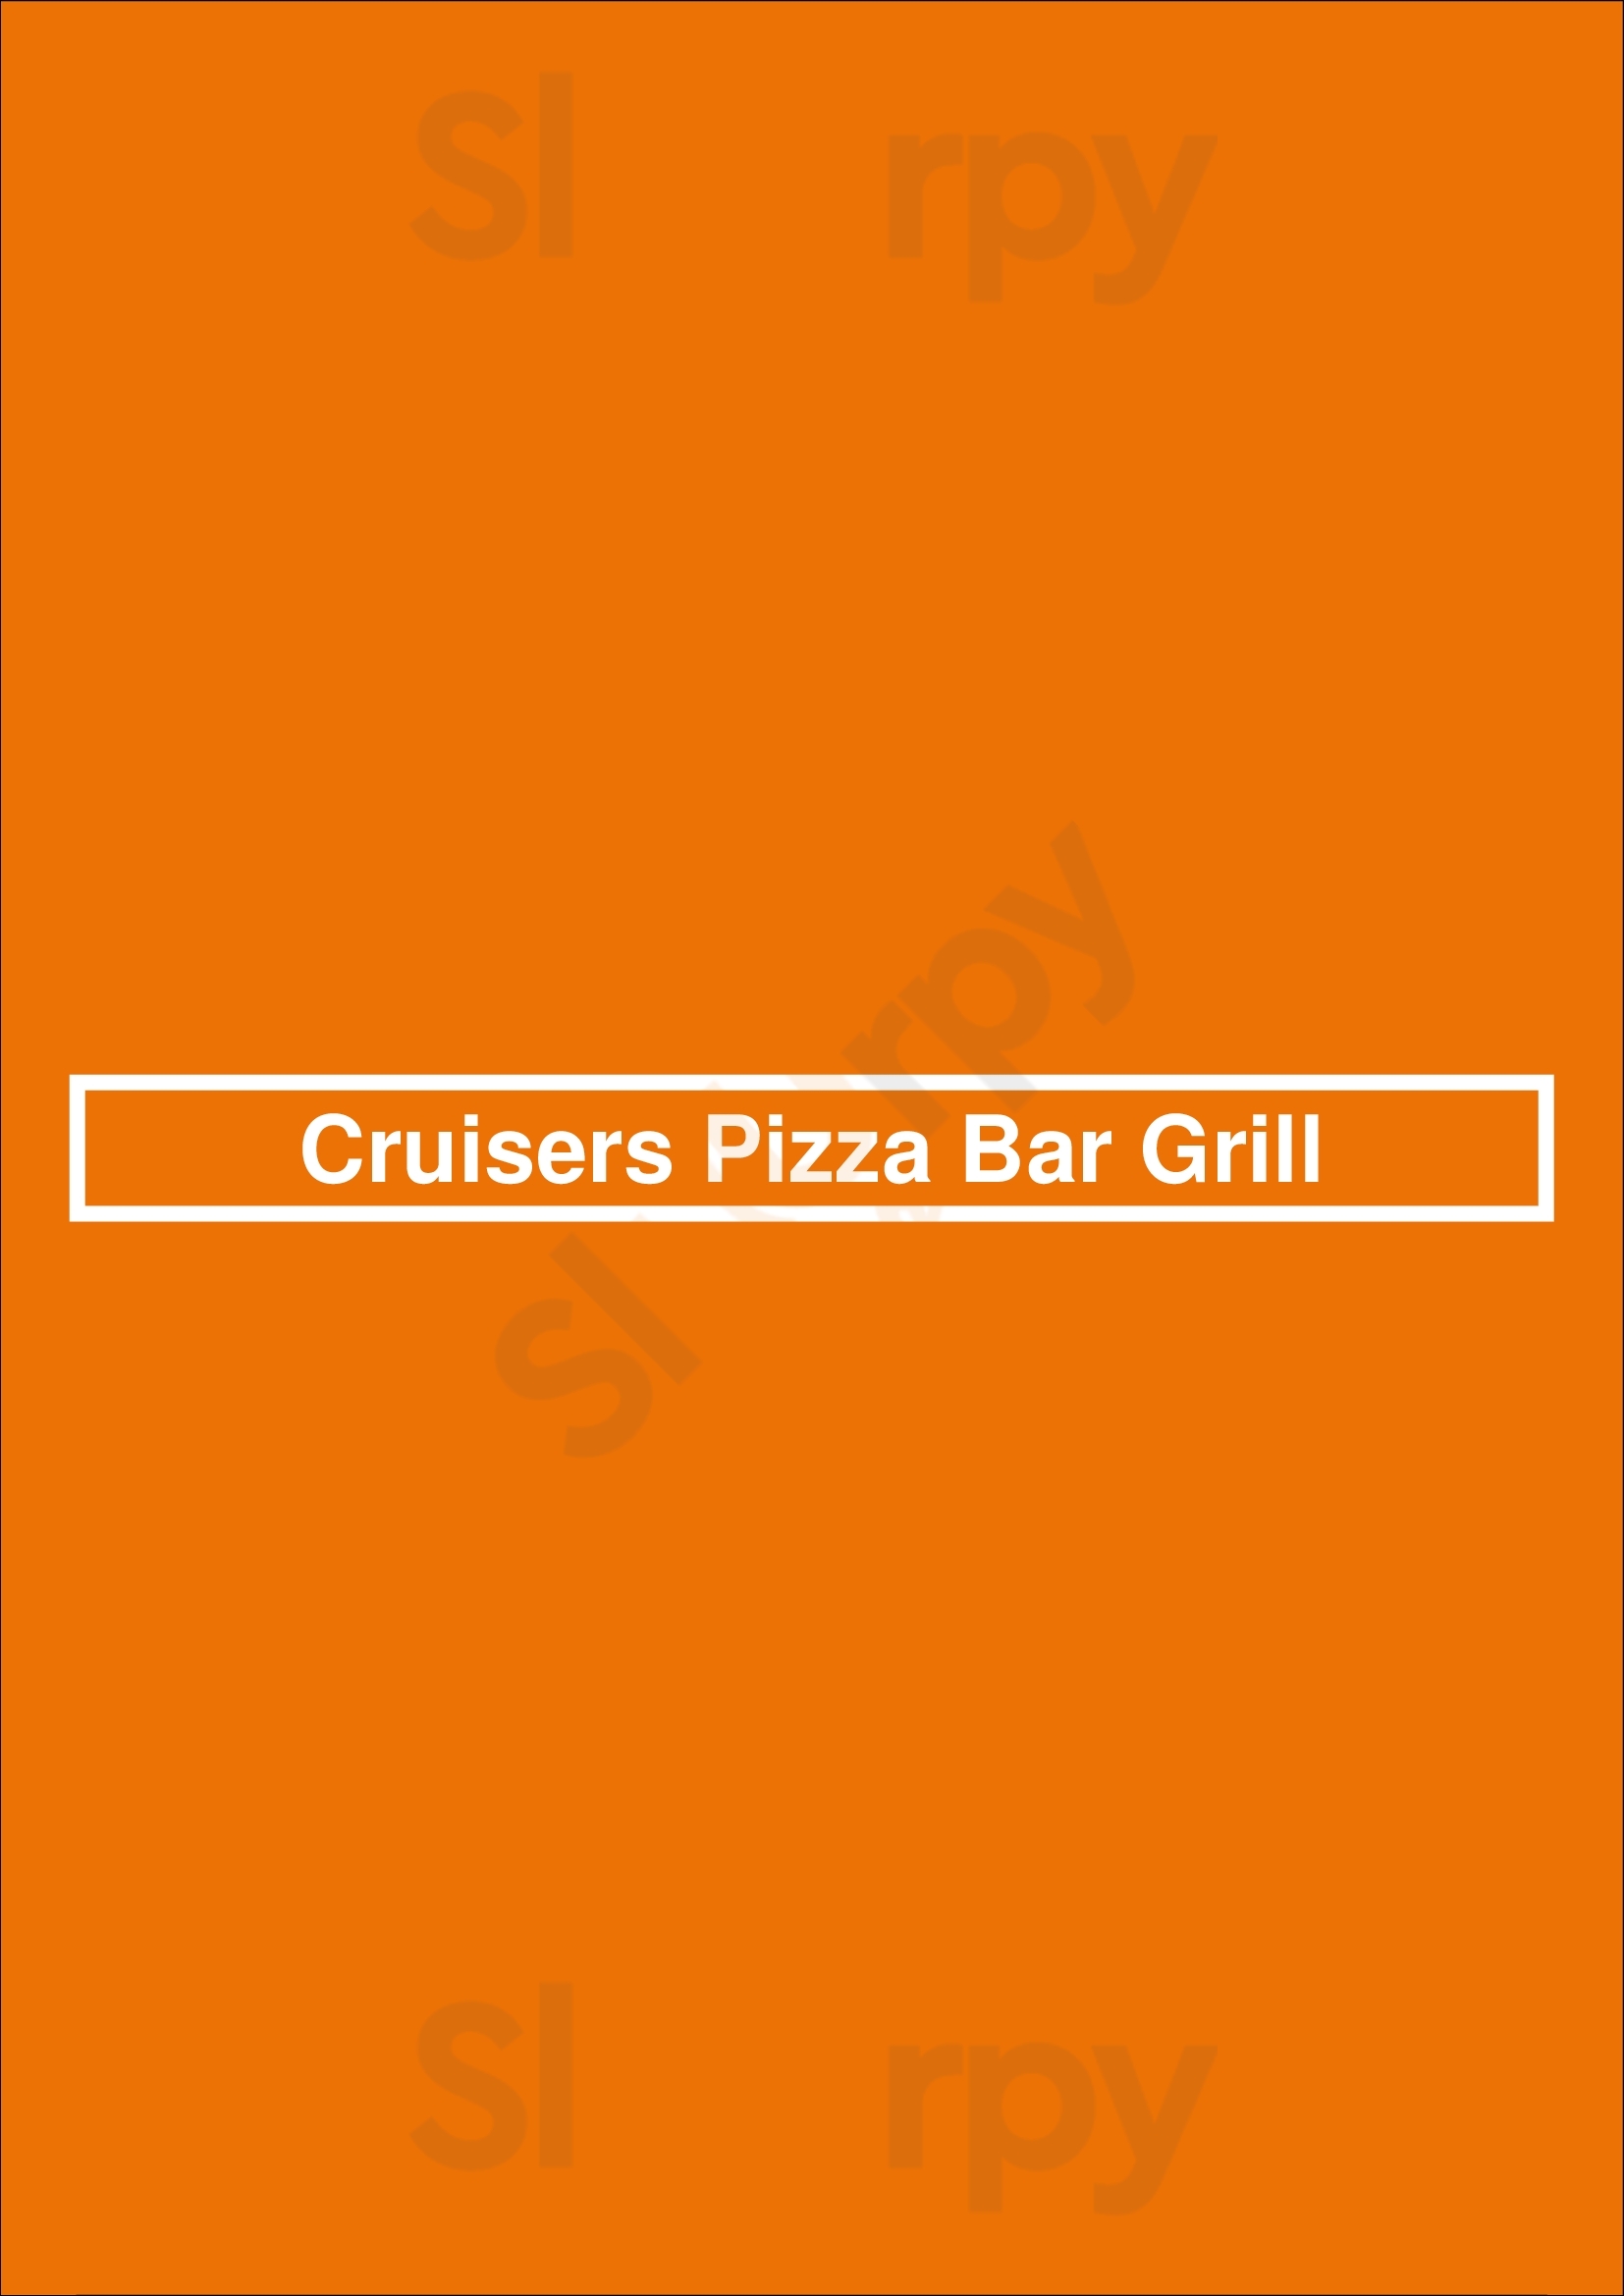 Cruisers Pizza Bar Grill Newport Beach Menu - 1